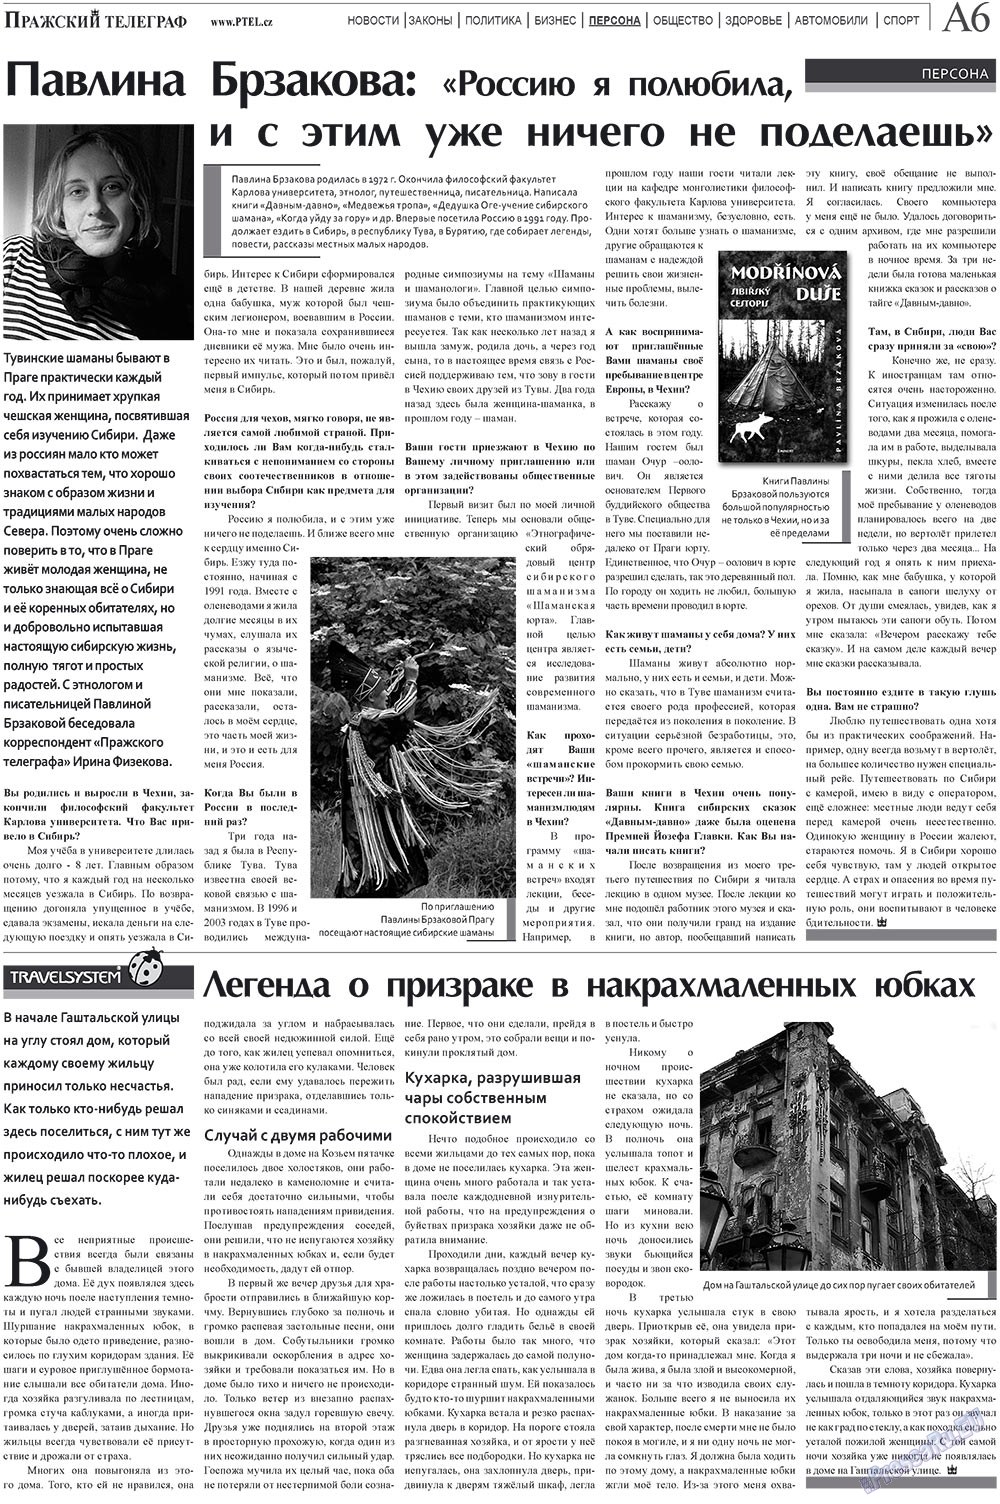 Пражский телеграф, газета. 2009 №32 стр.6